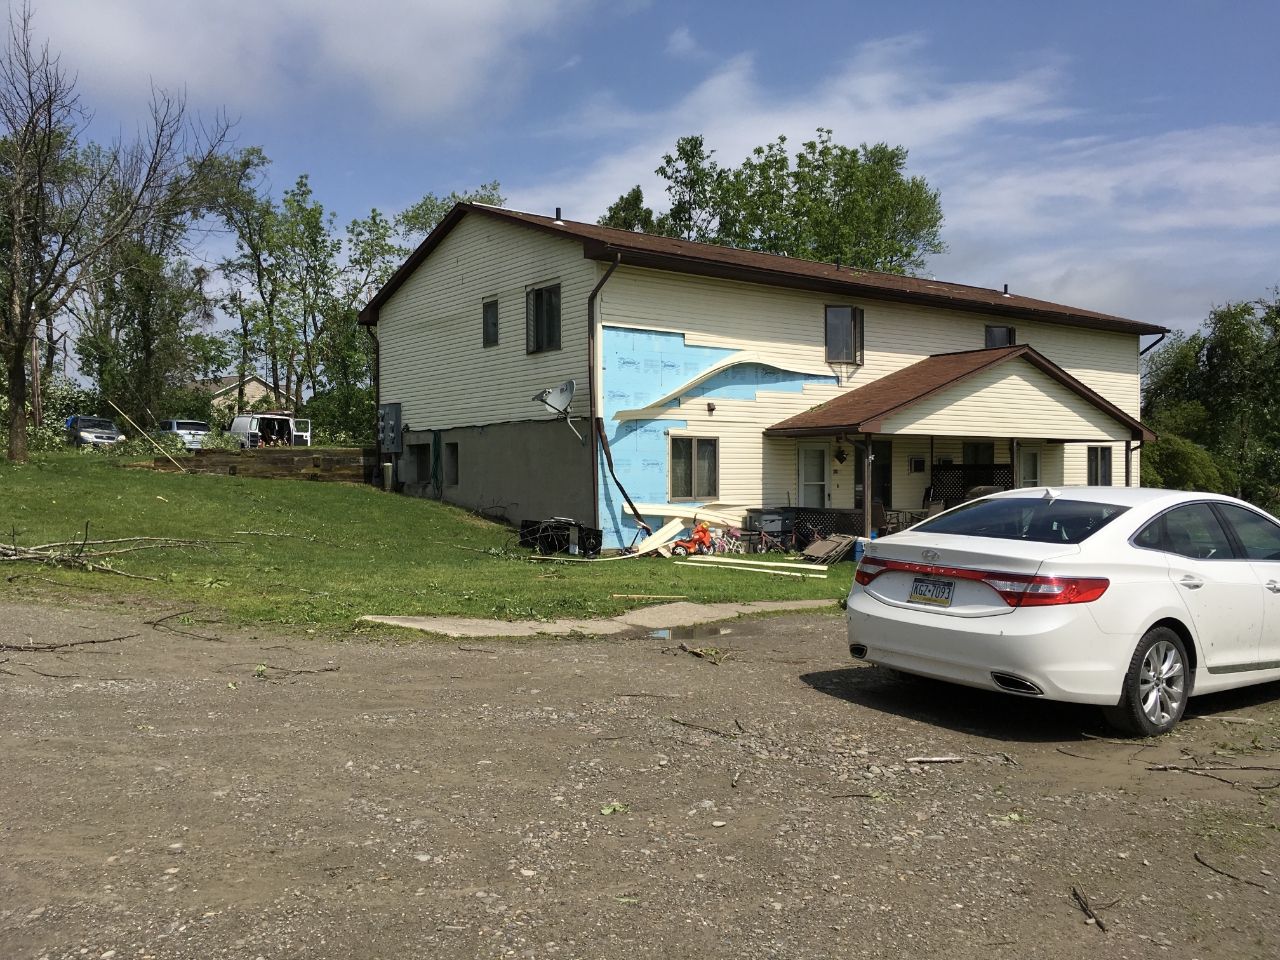 Siding damaged in Newton Township, PA